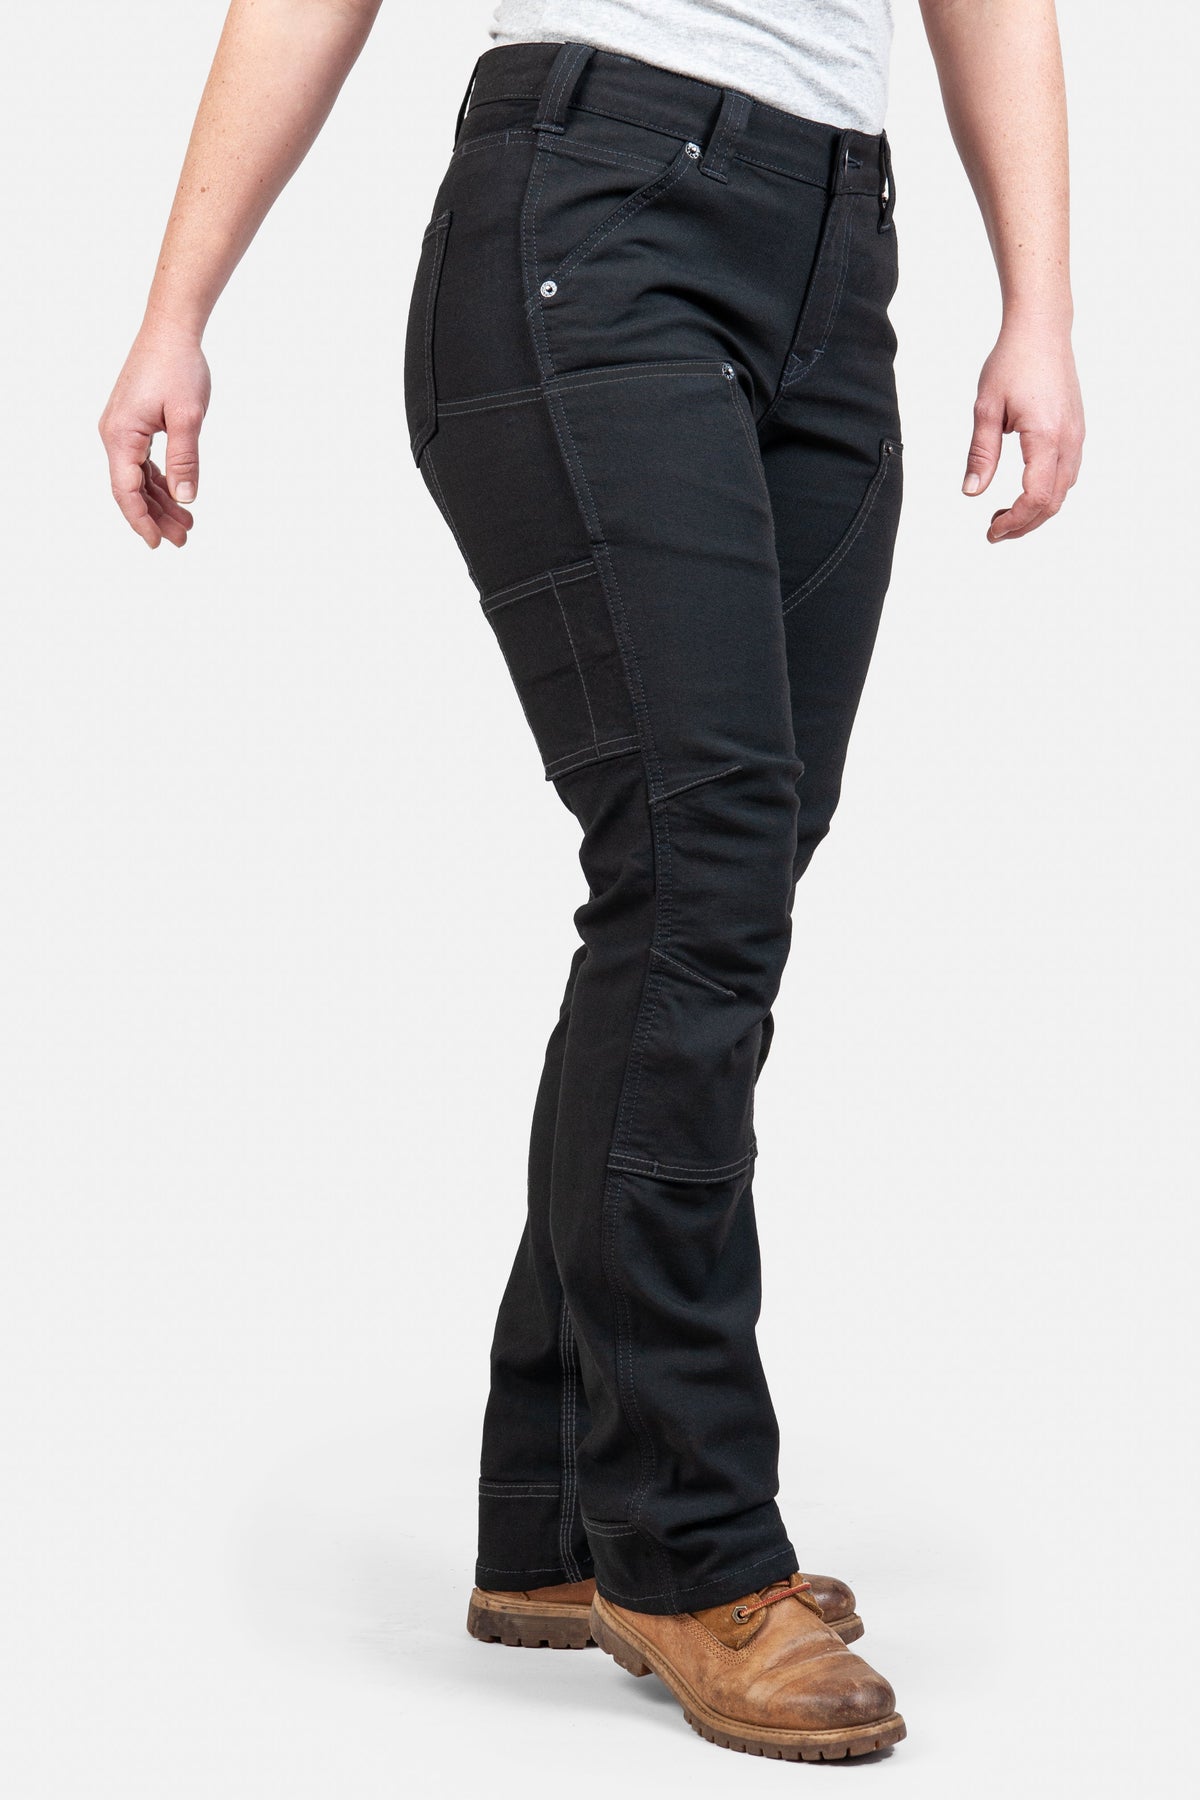 Dovetail Workwear (W) Britt Canvas Utility Pant - Work World - Workwear, Work Boots, Safety Gear